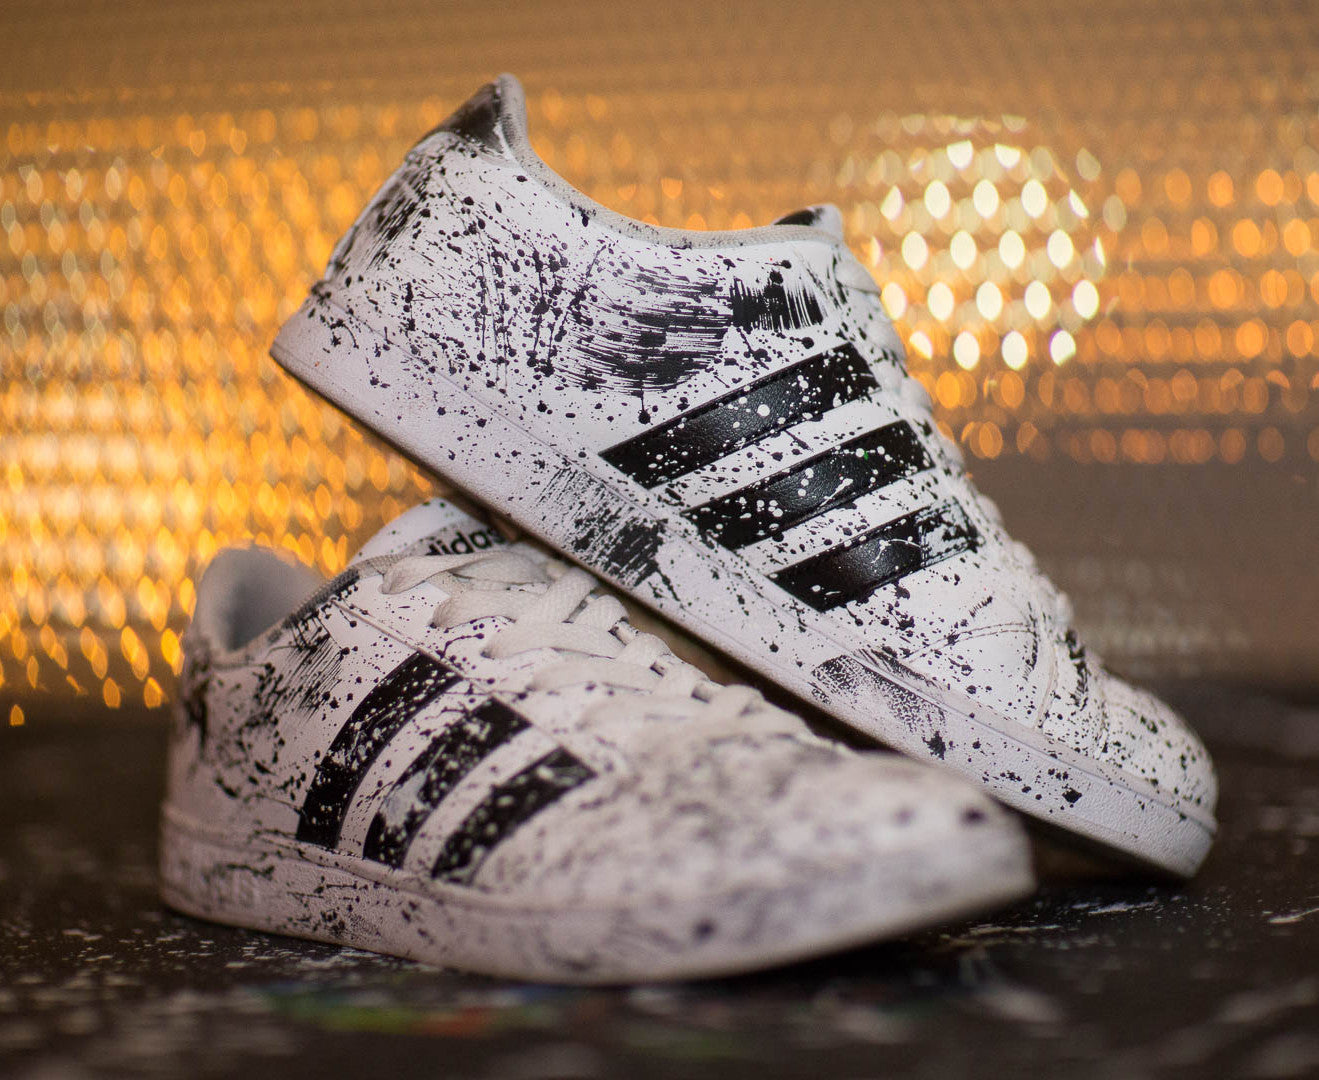 Hand painted Adidas Superstars  Painted adidas, Adidas shoes